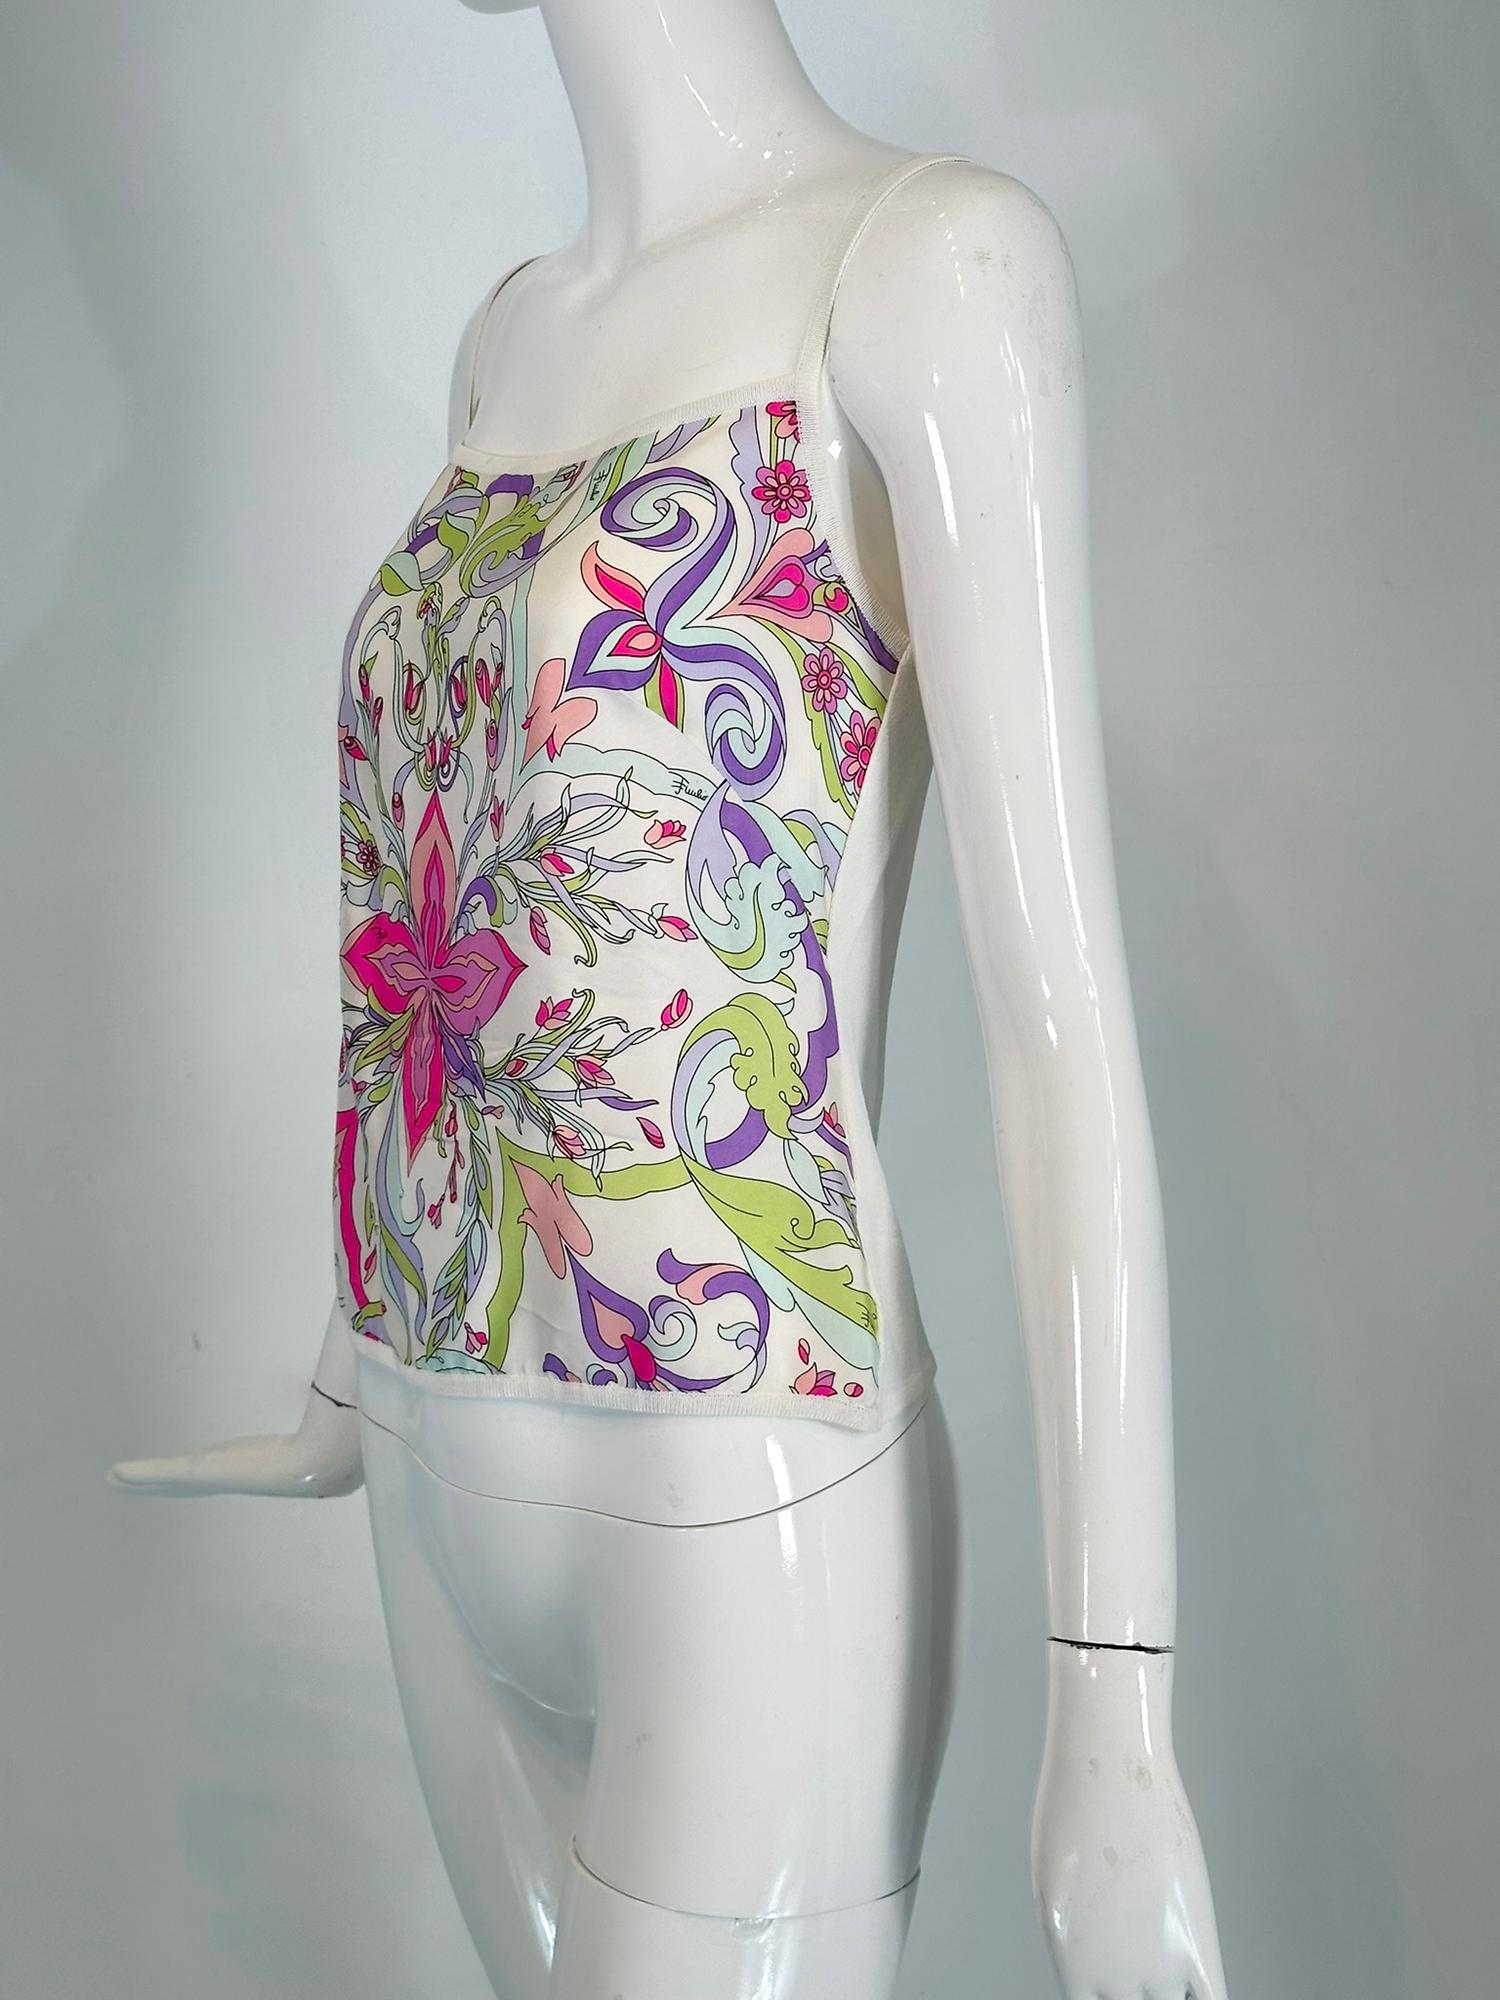 Emilio Pucci Silk Print Camisole 8 In Good Condition For Sale In West Palm Beach, FL